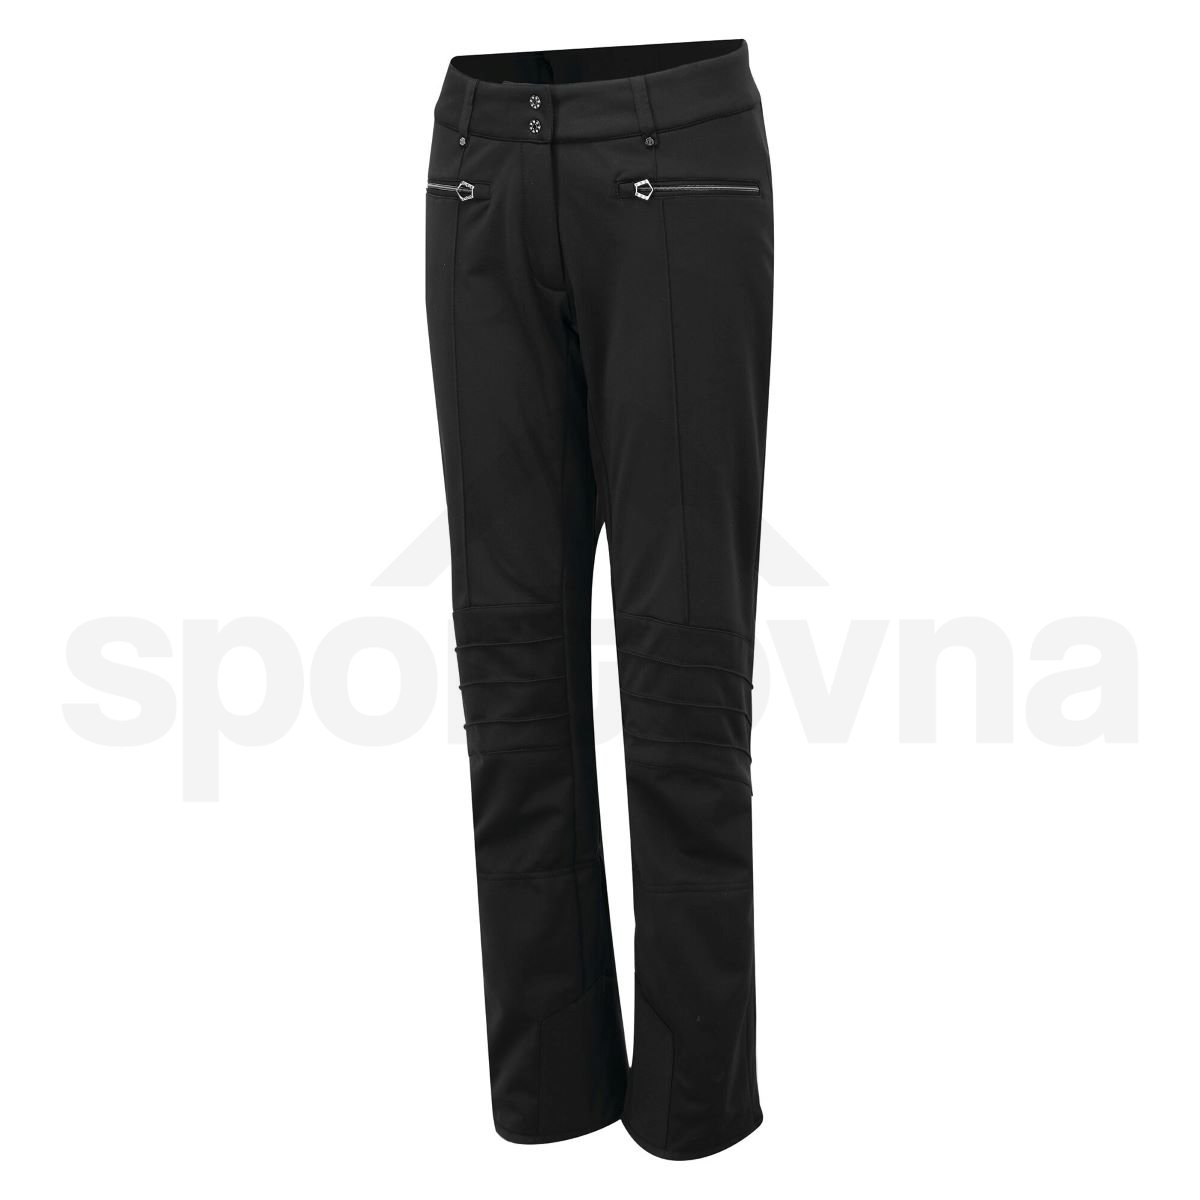 Kalhoty Dare2b Inspired W - černá